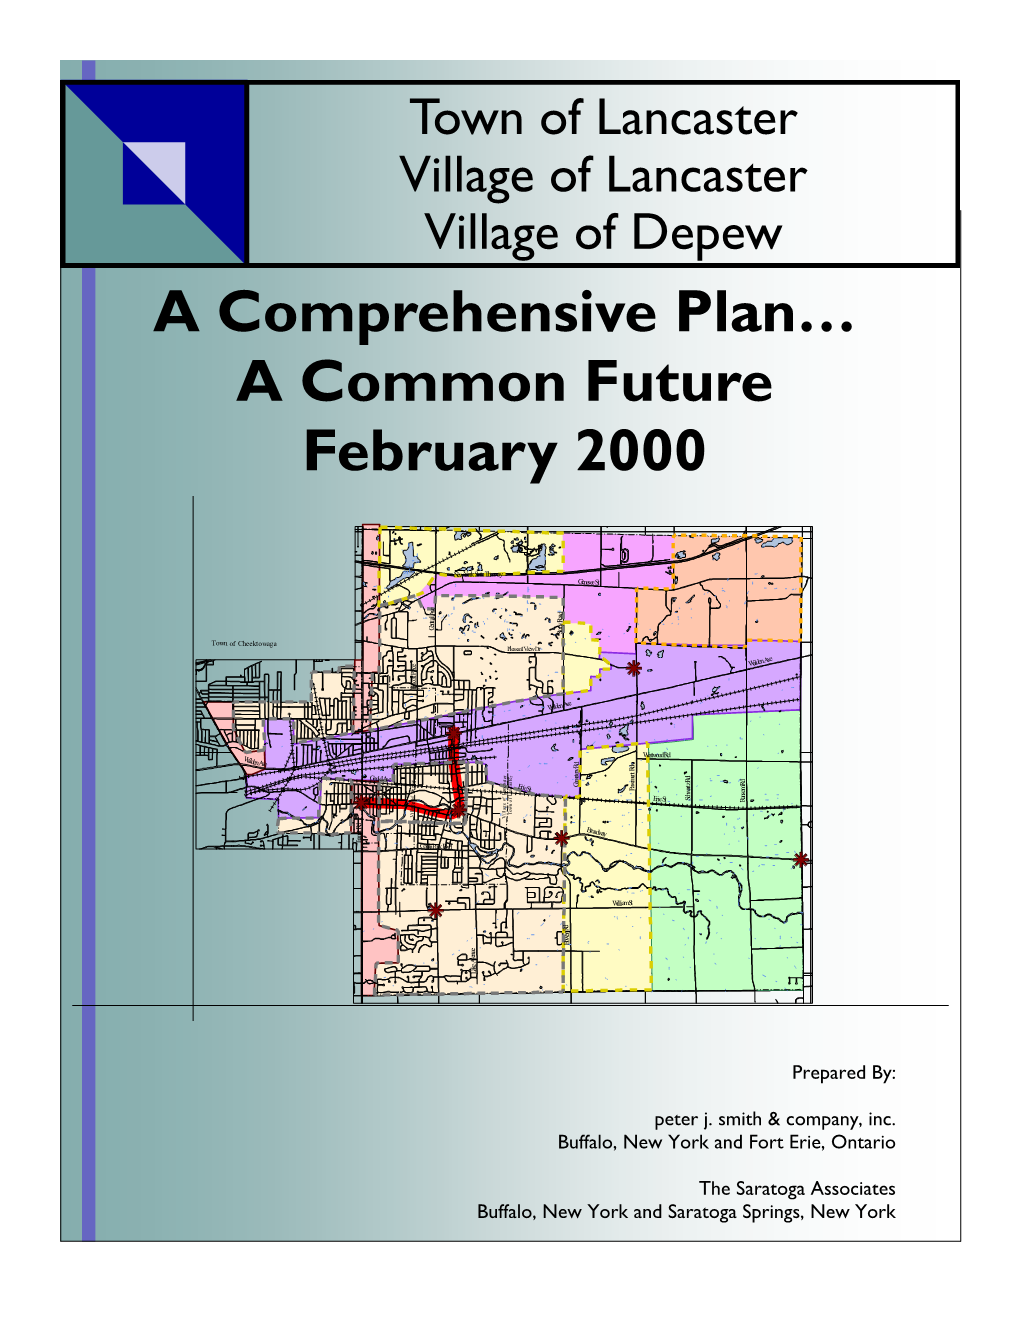 A Comprehensive Plan… a Common Future February 2000